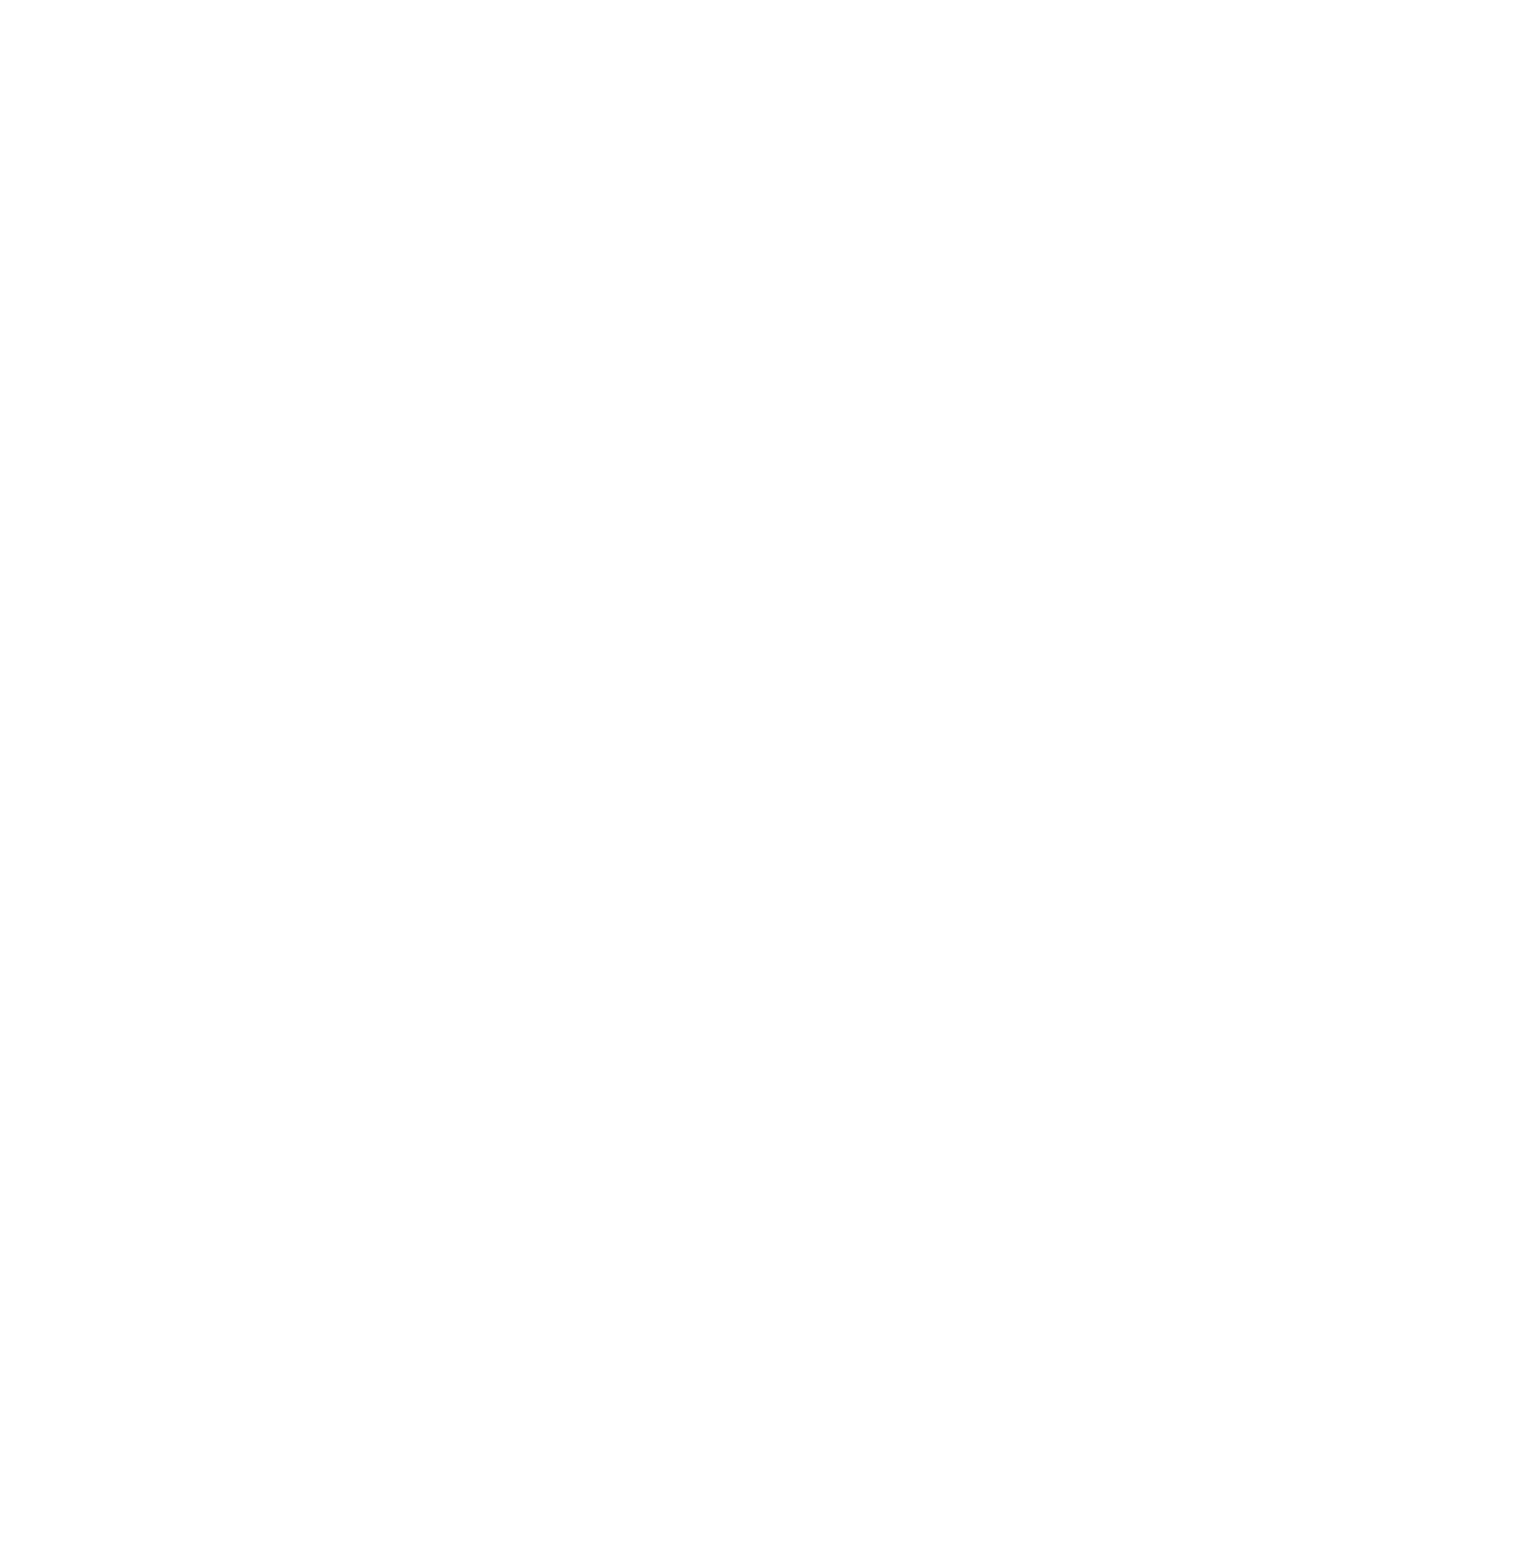 PGIM ETFs logo for dark backgrounds (transparent PNG)